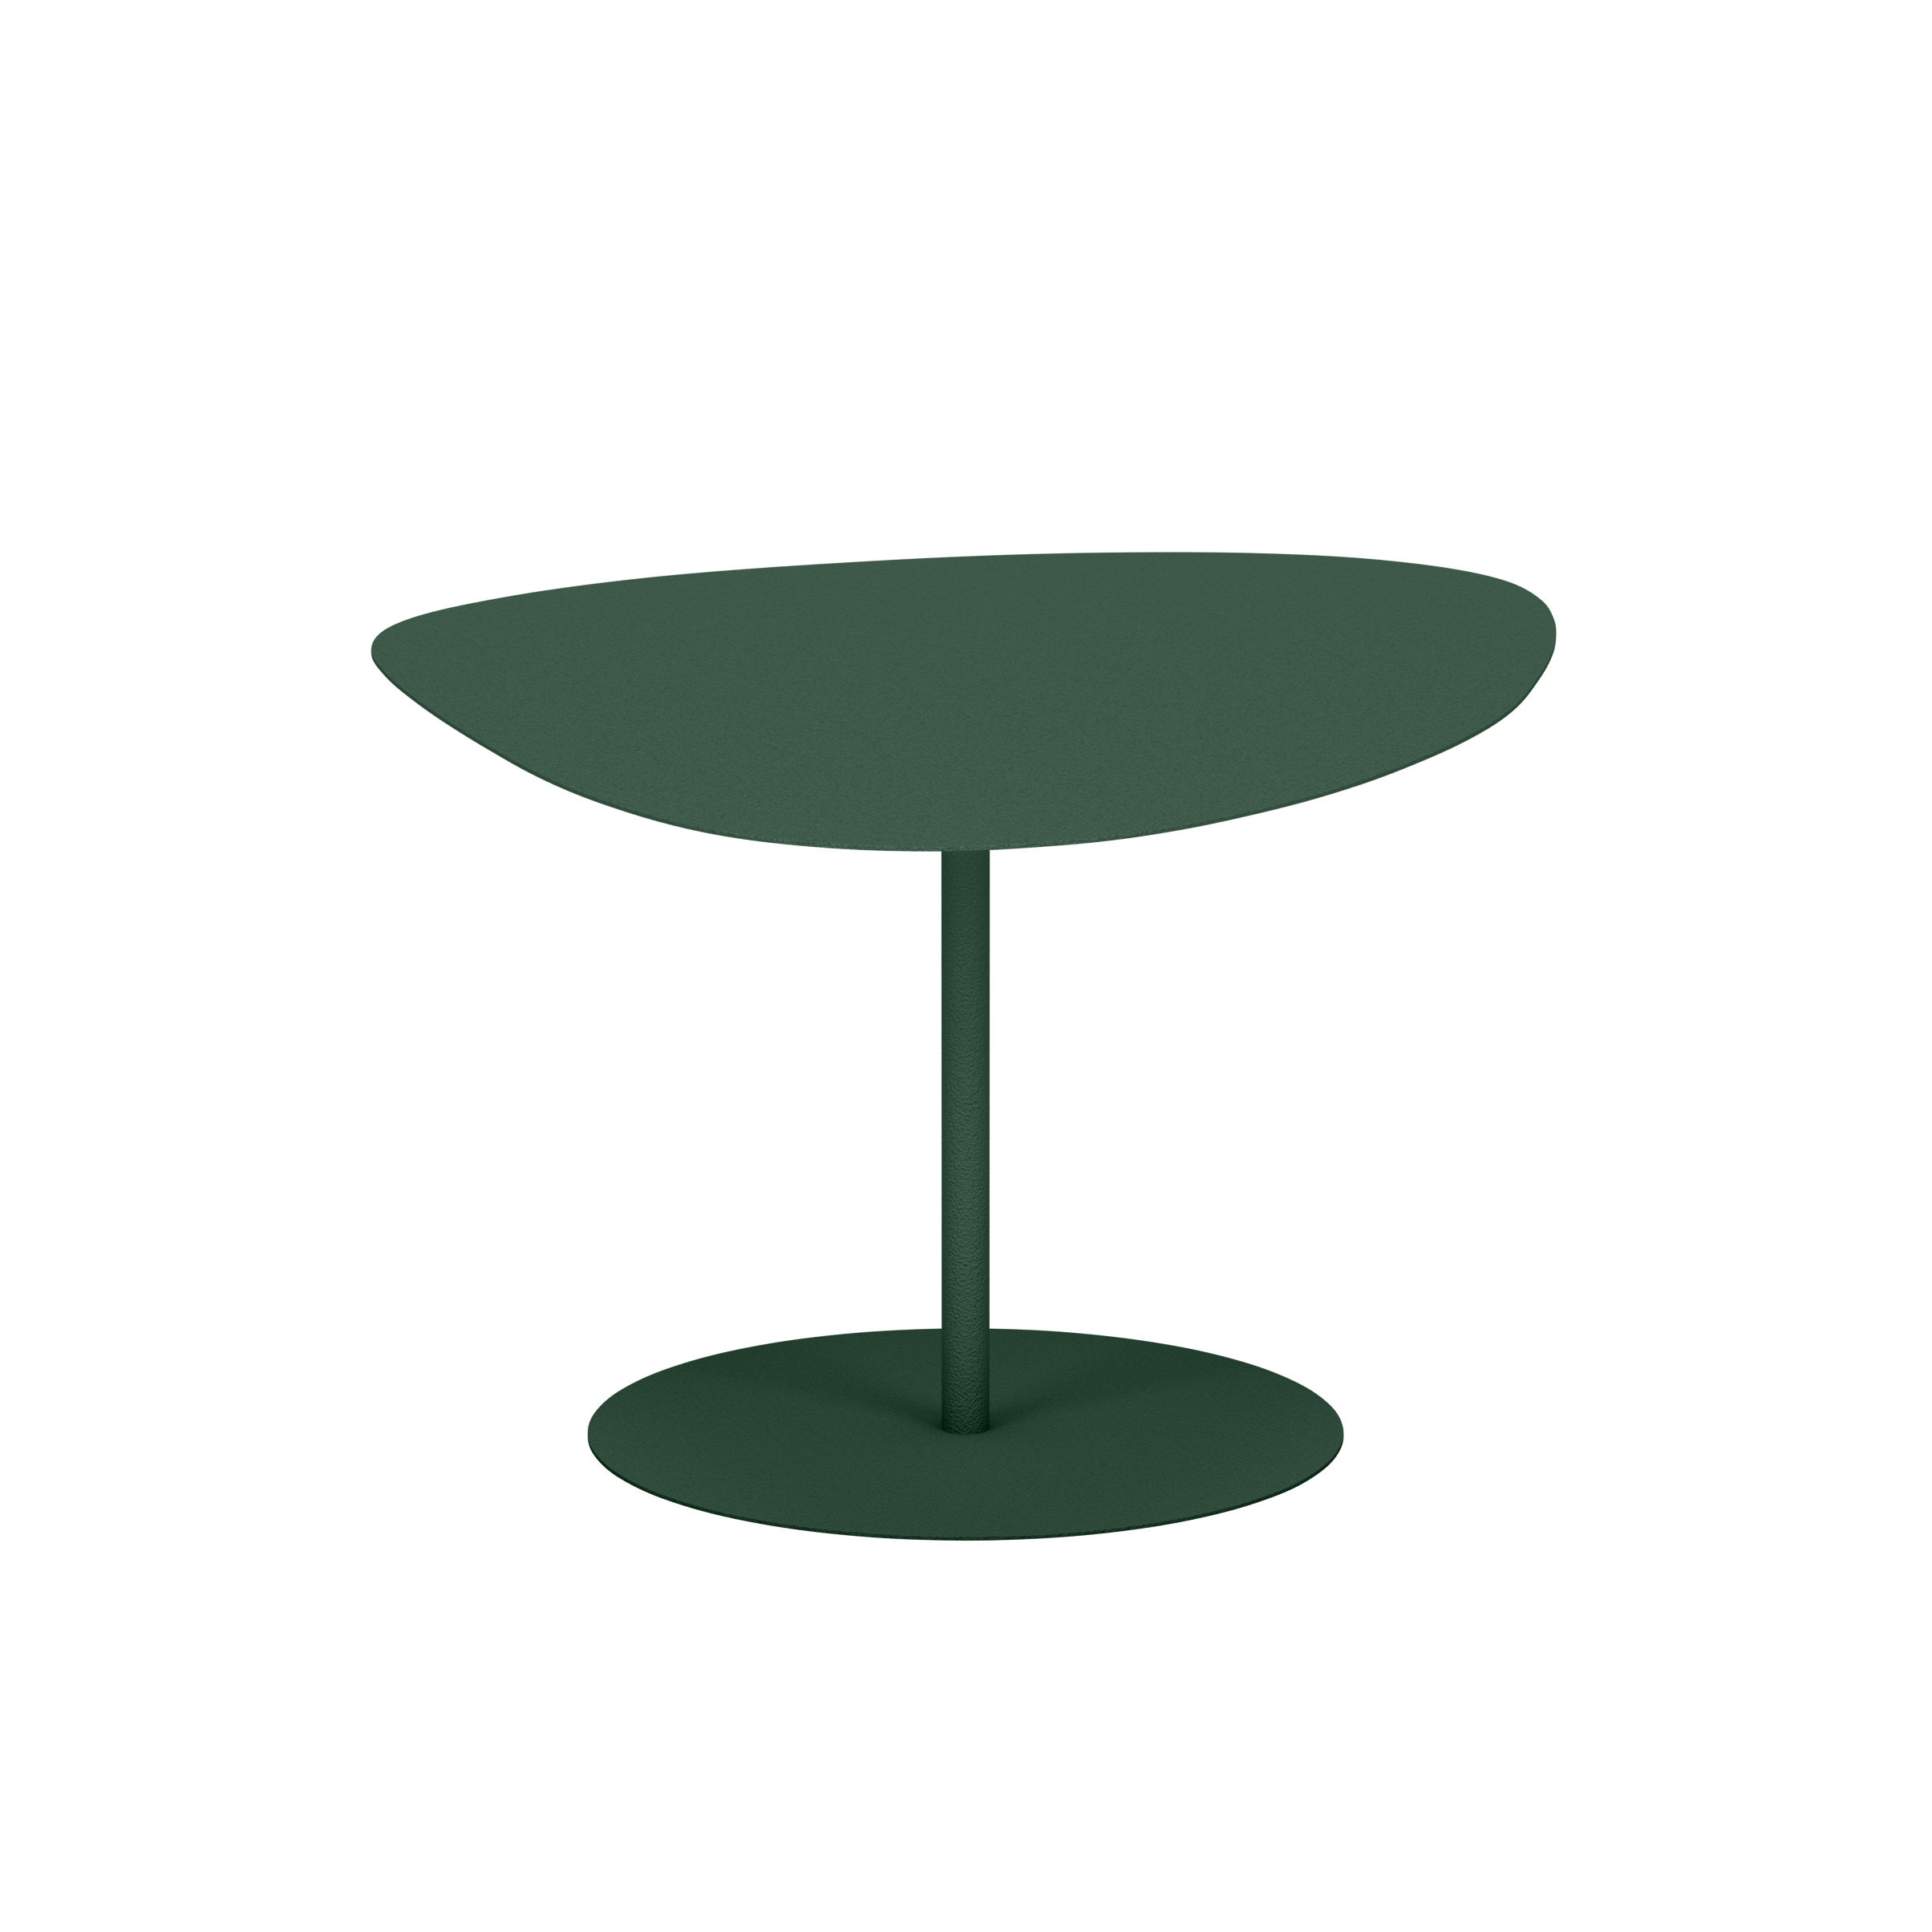 Table basse Galet n°2 OUTDOOR / 58 x 75 x H 39 cm - Matière Grise vert en métal